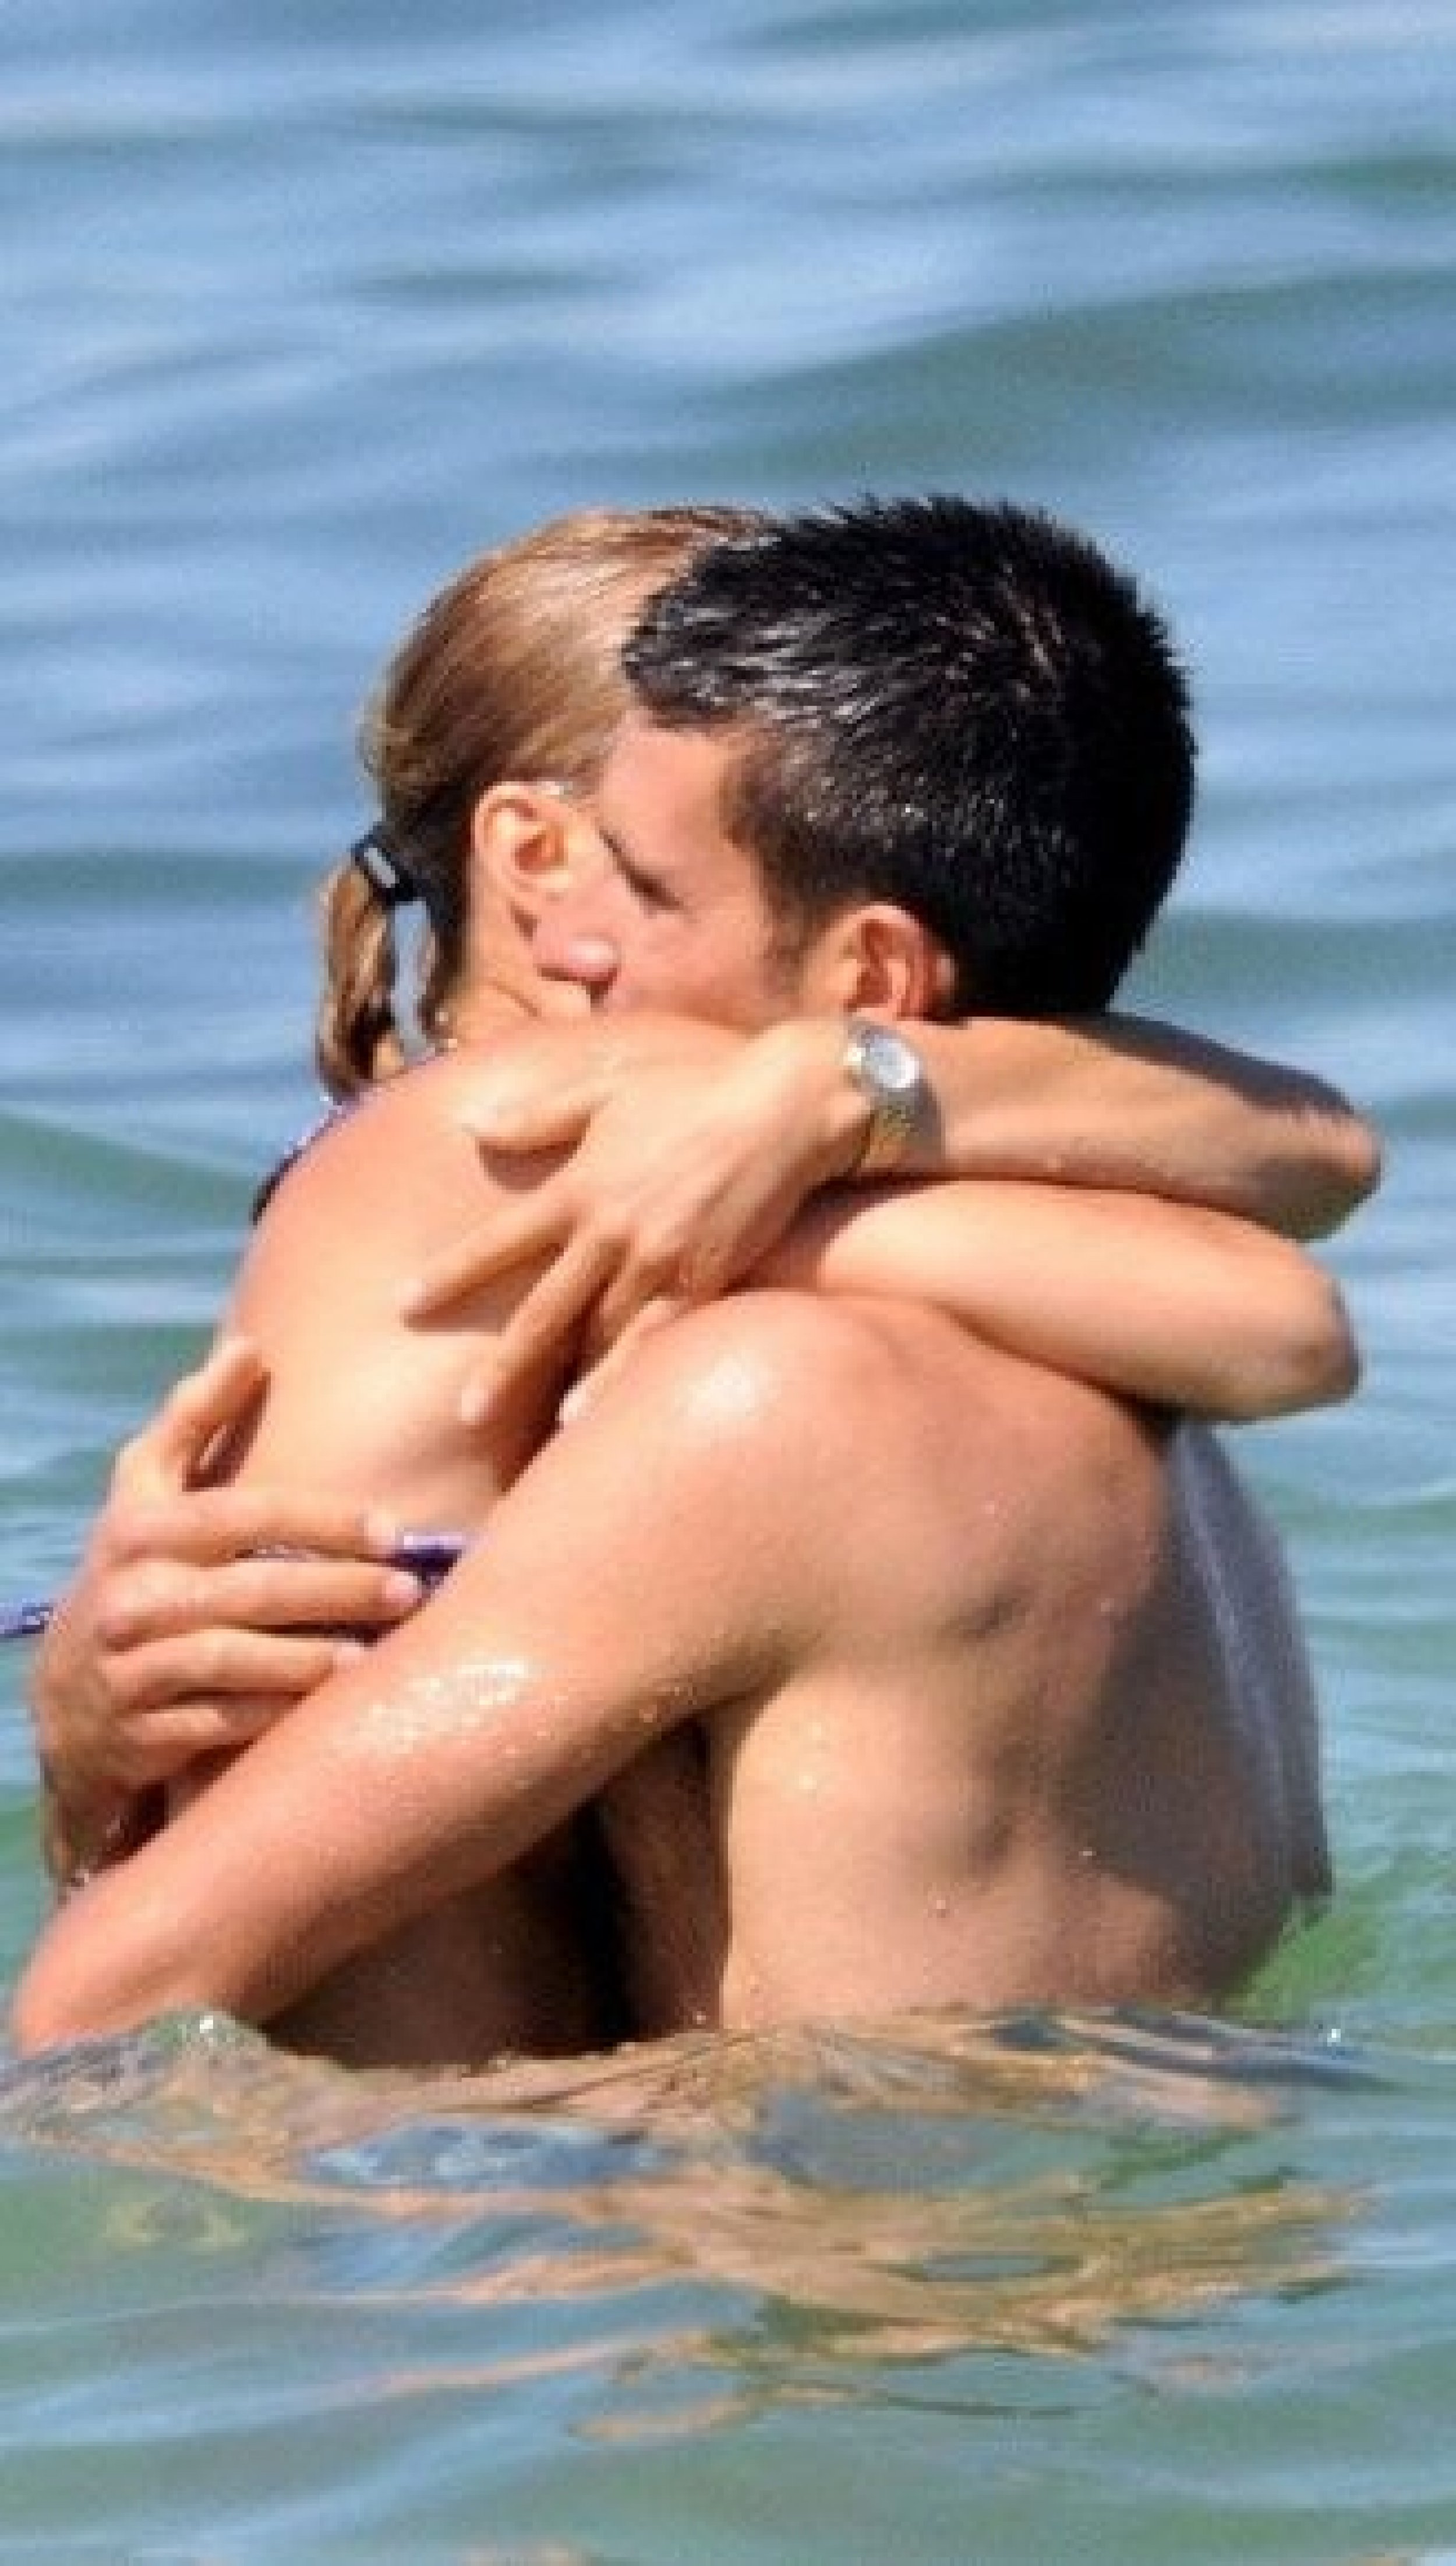 Tennis star Novak Djokovic with girlfriend Jelena Ristic